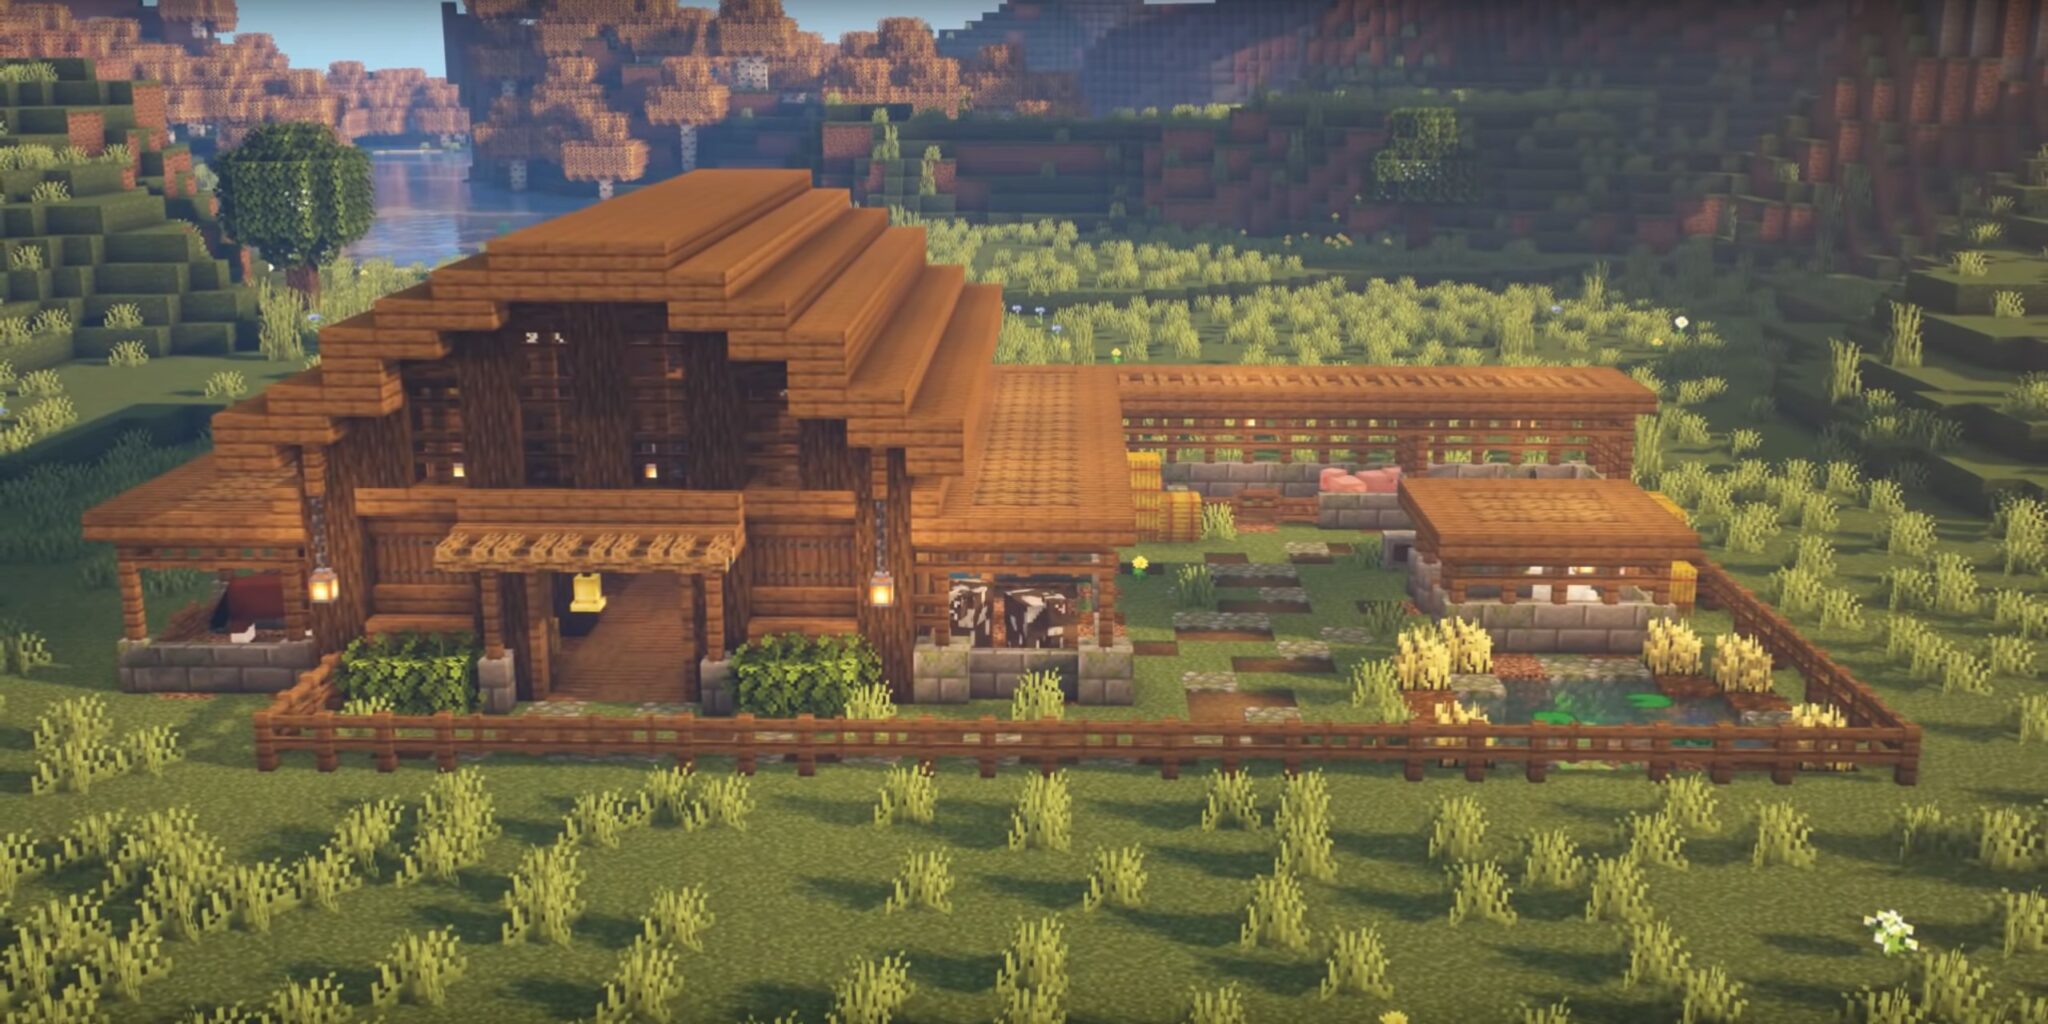 Minecraft Barn for Animals Ideas and Design